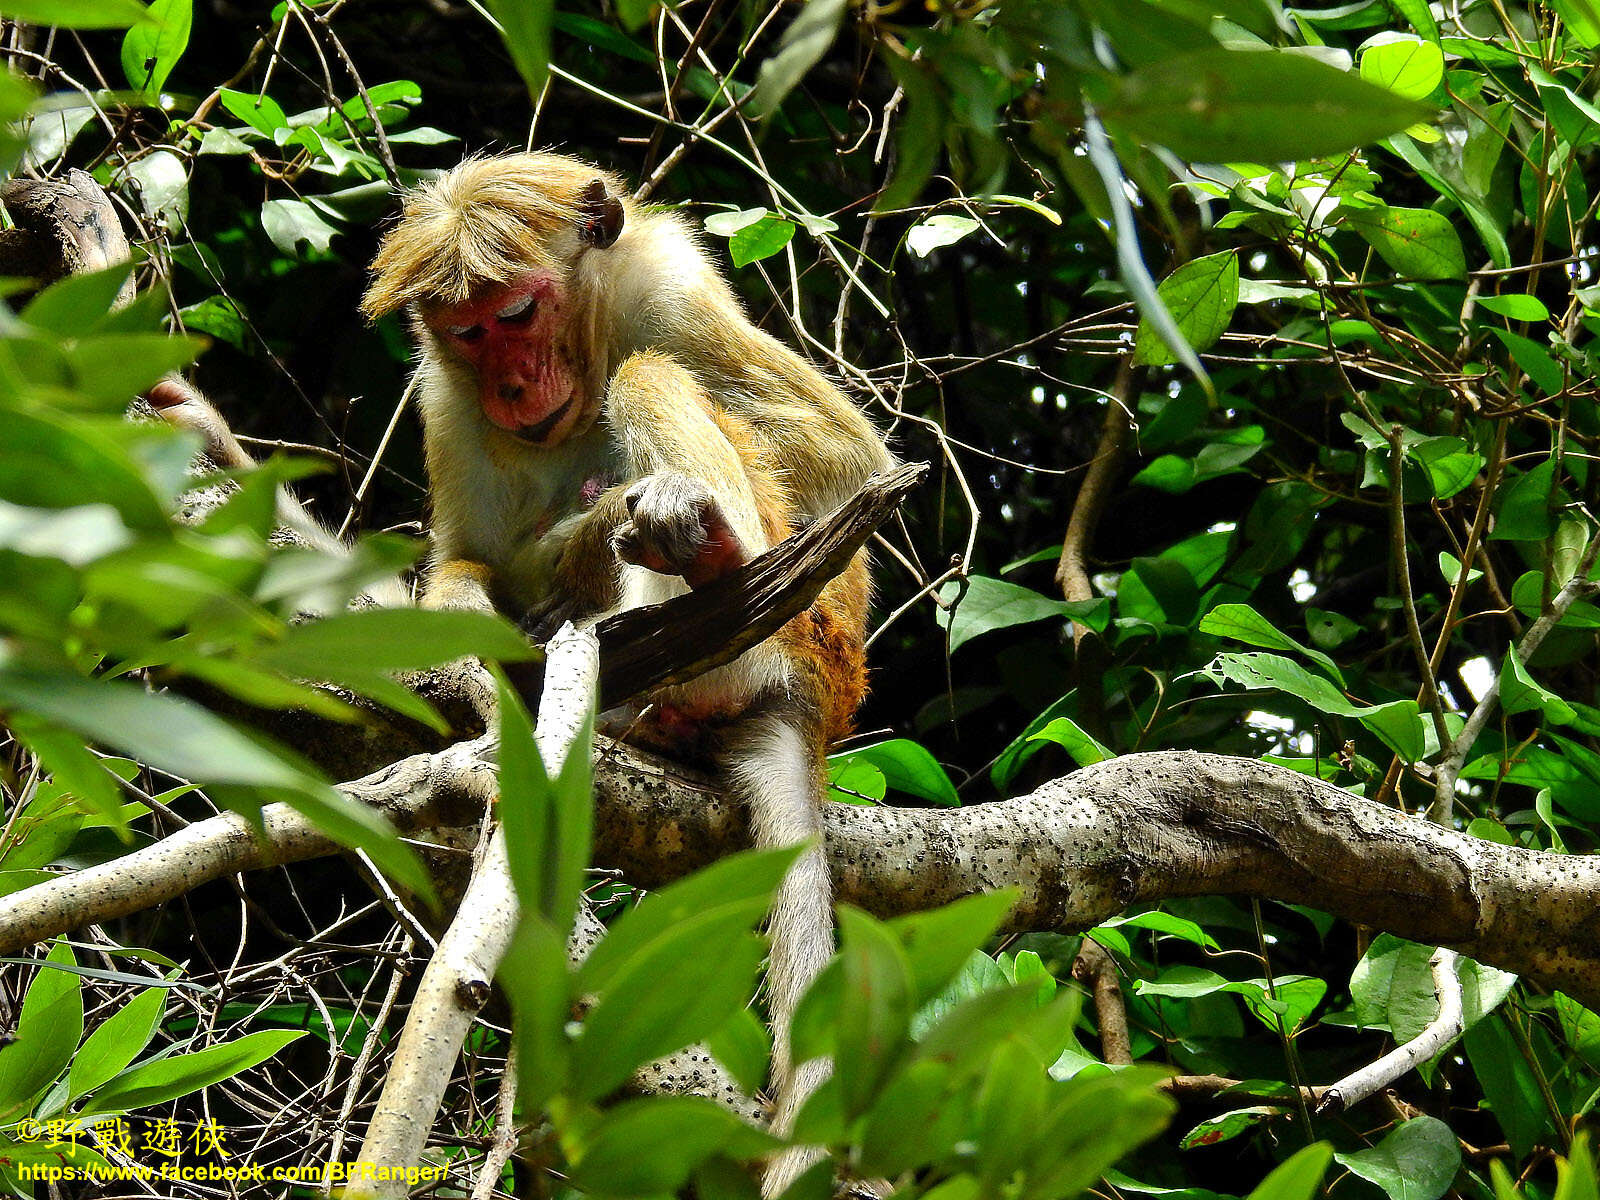 Image of Toque macaque